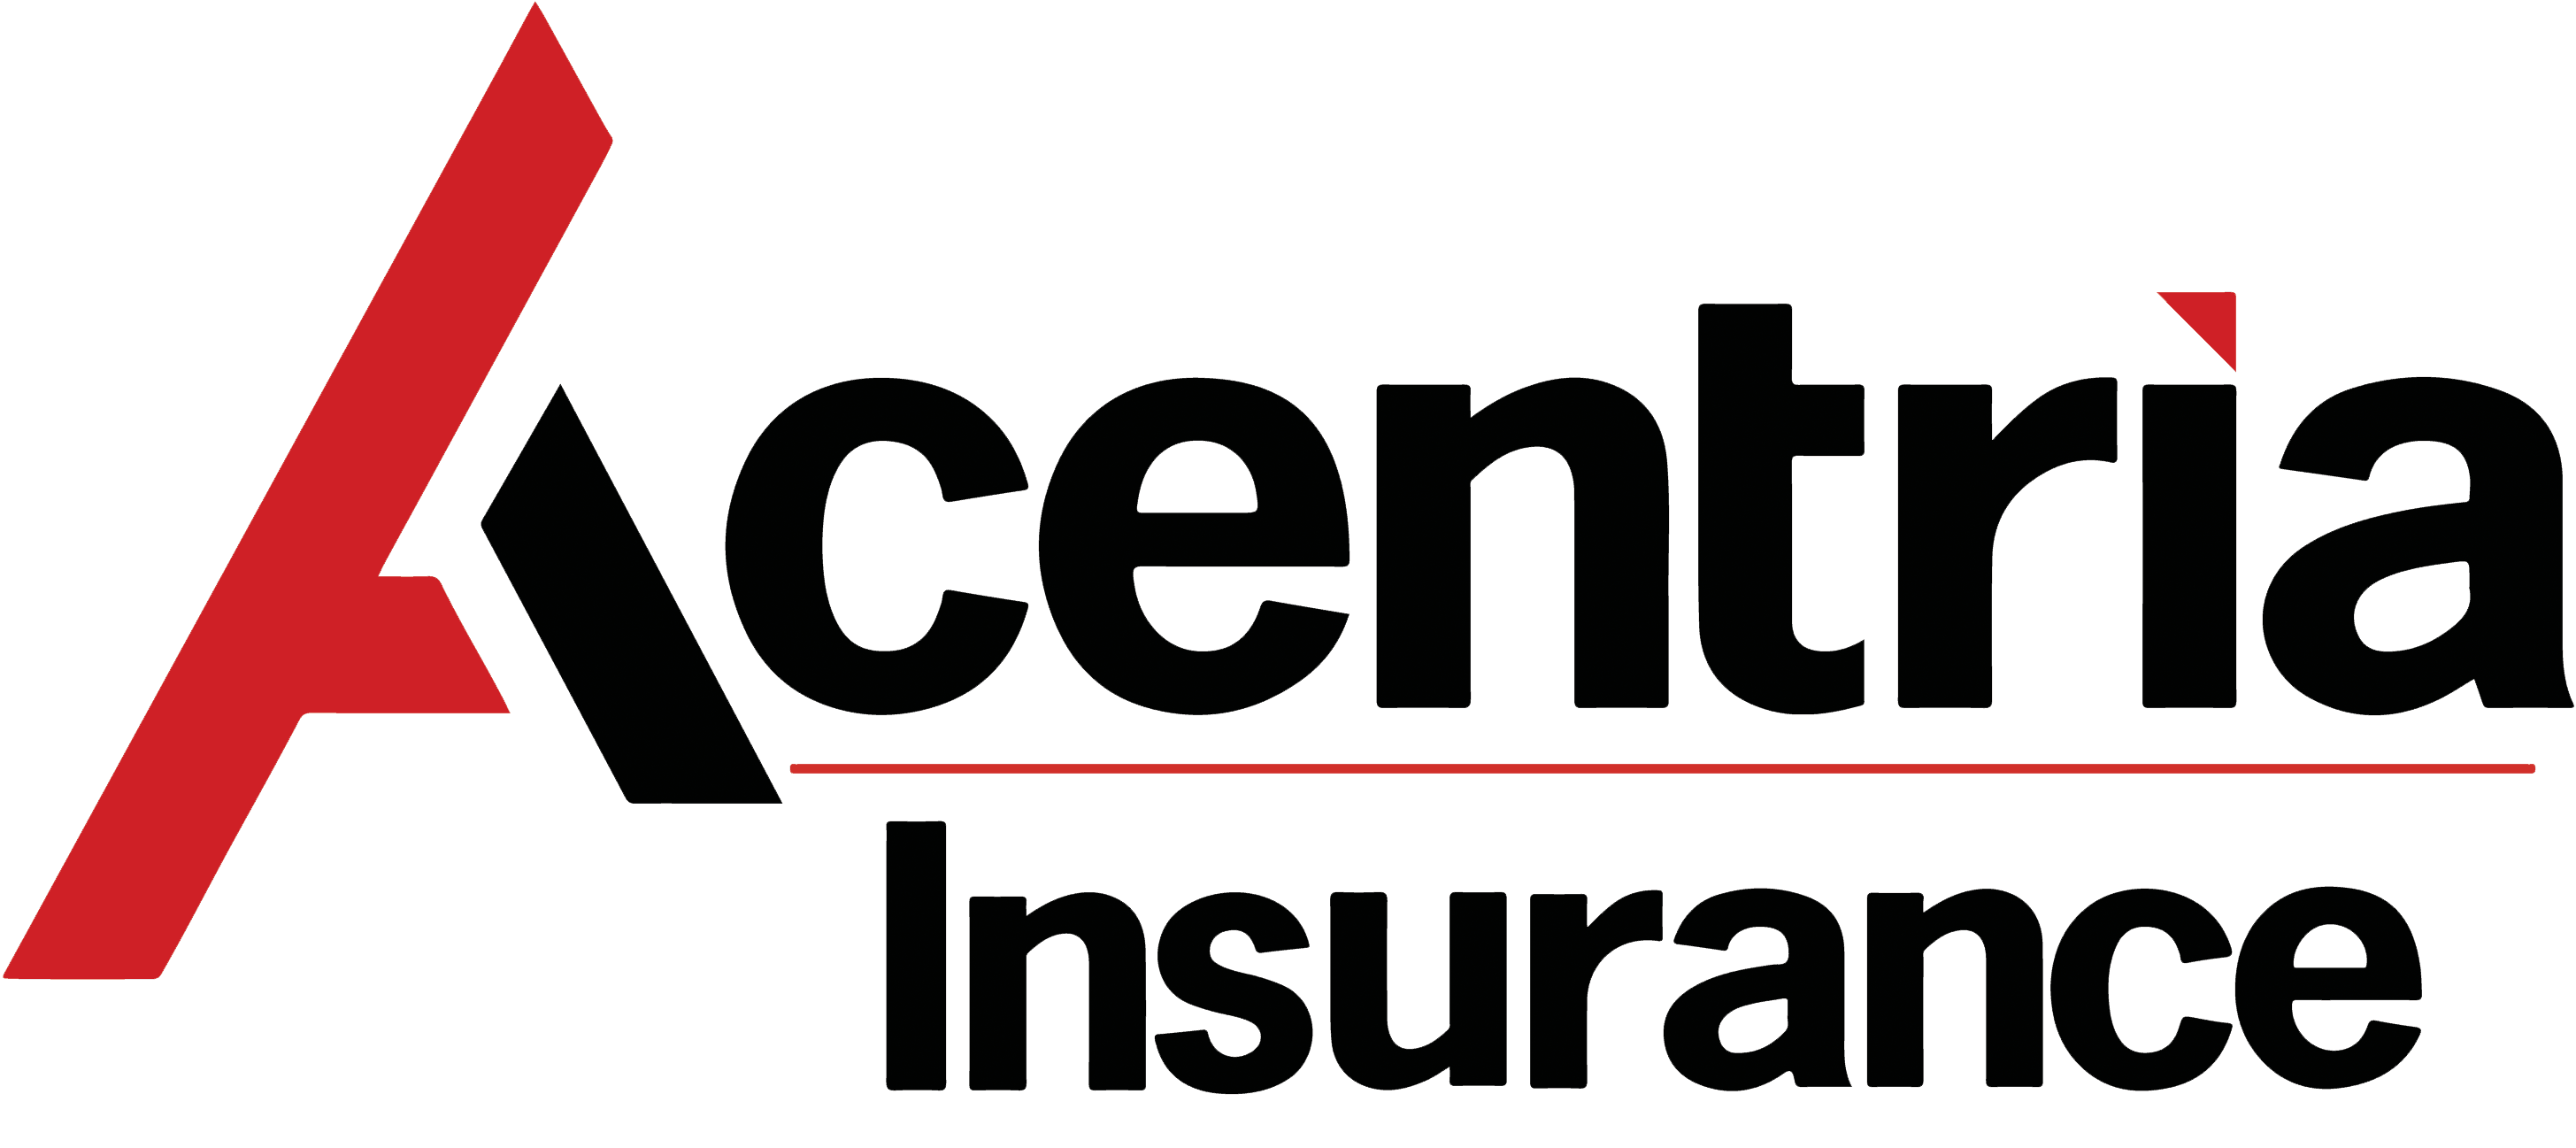 Acentria Insurance 